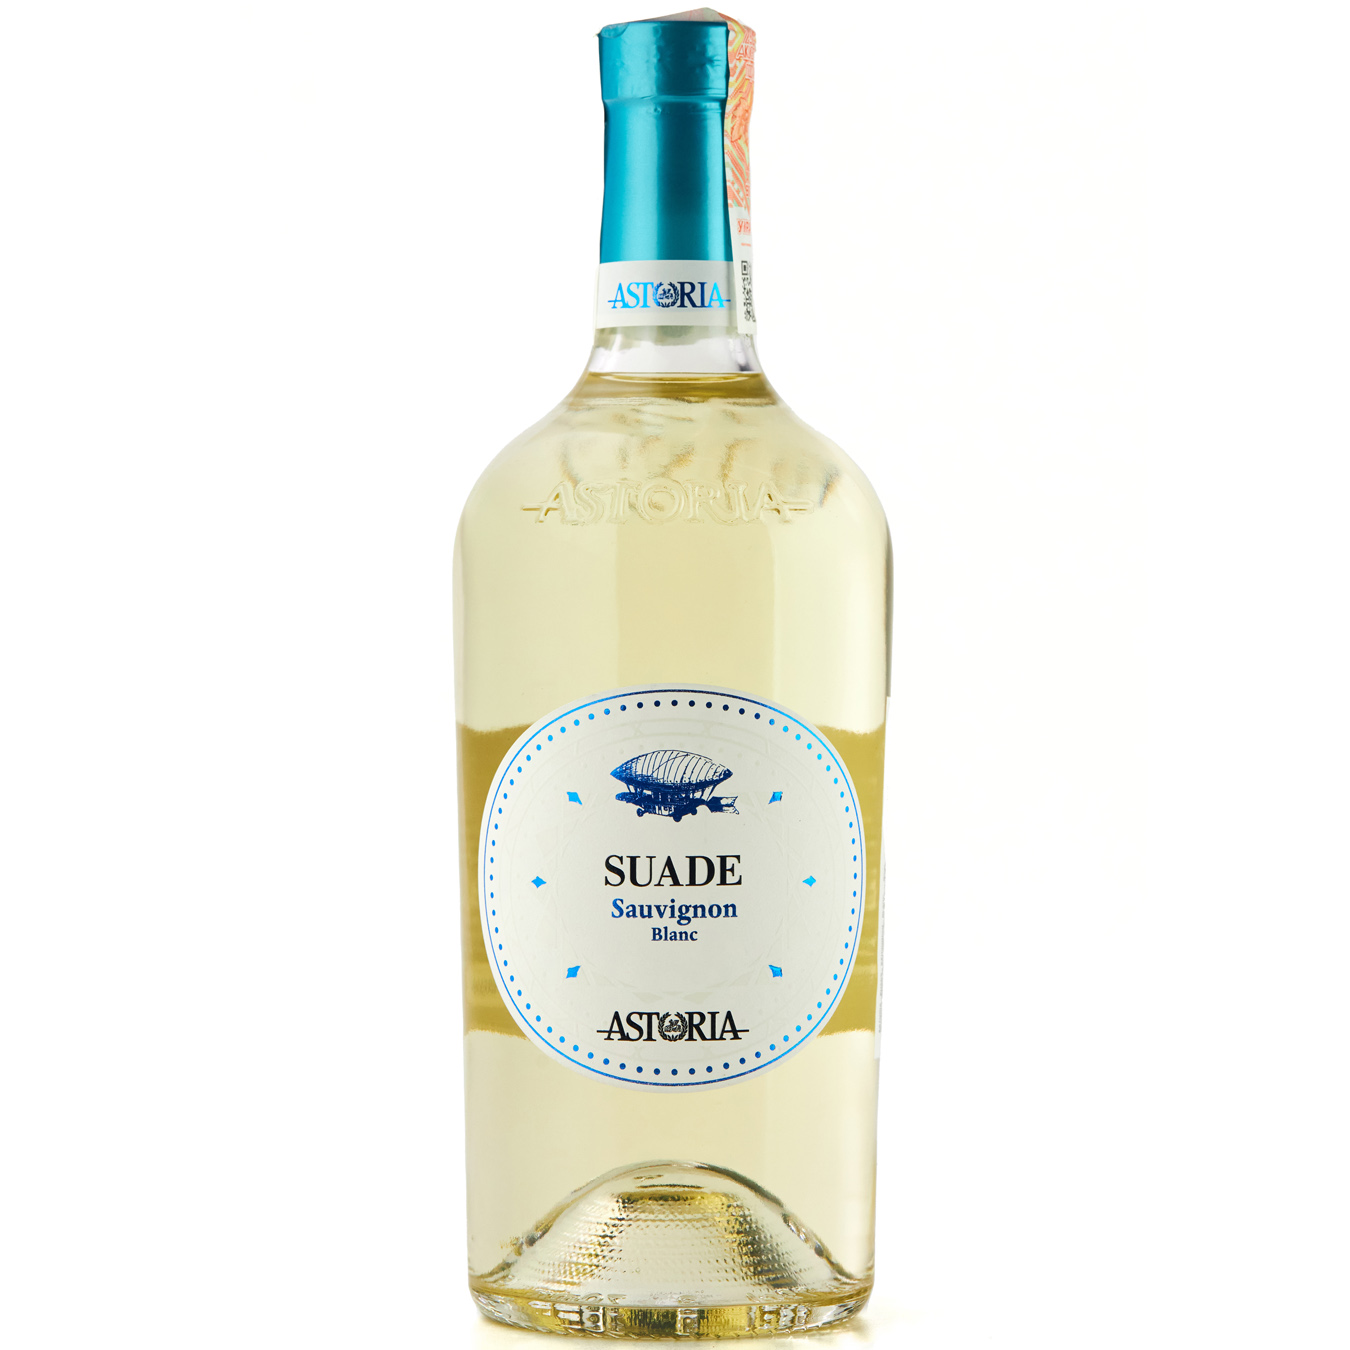 Astoria Suade Sauvignon Blanc Trevenezie IGT white semi-dry wine 12% 0, 75l